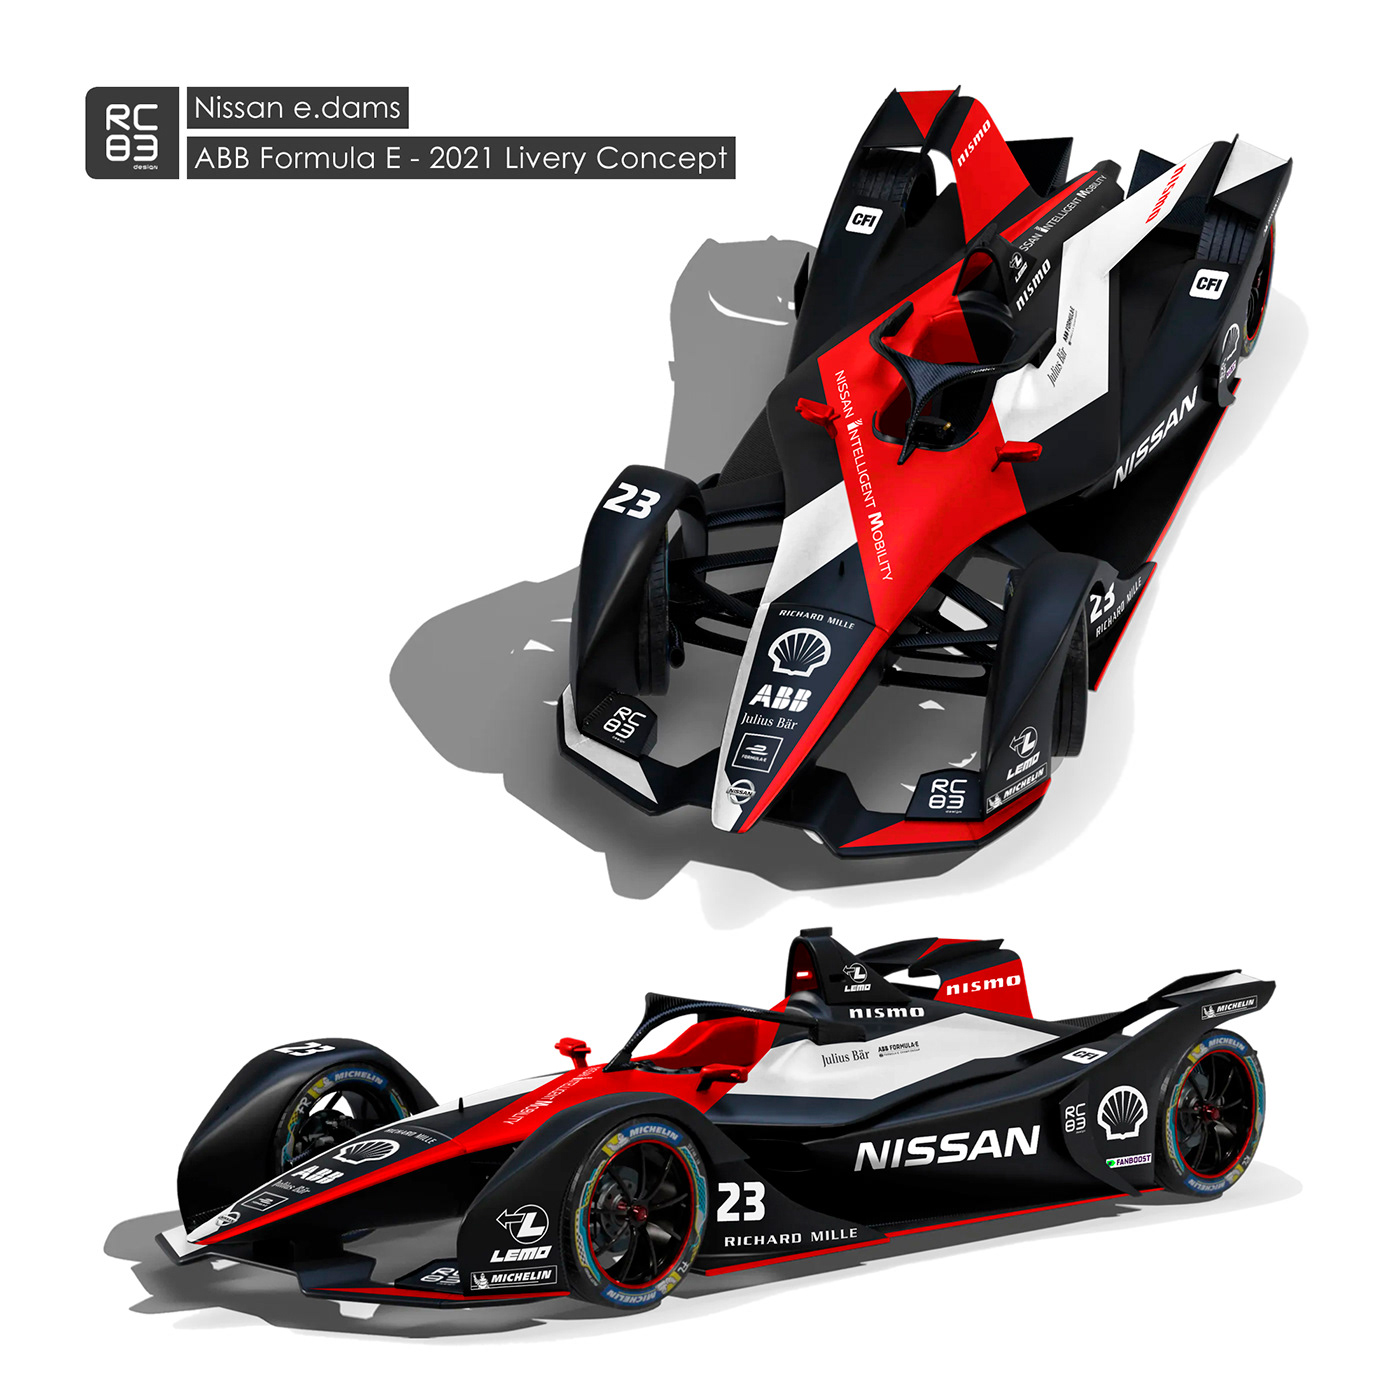 Automotive design car design formula Formulae Livery livery concept Motor racing Motorsport Racing rc83design